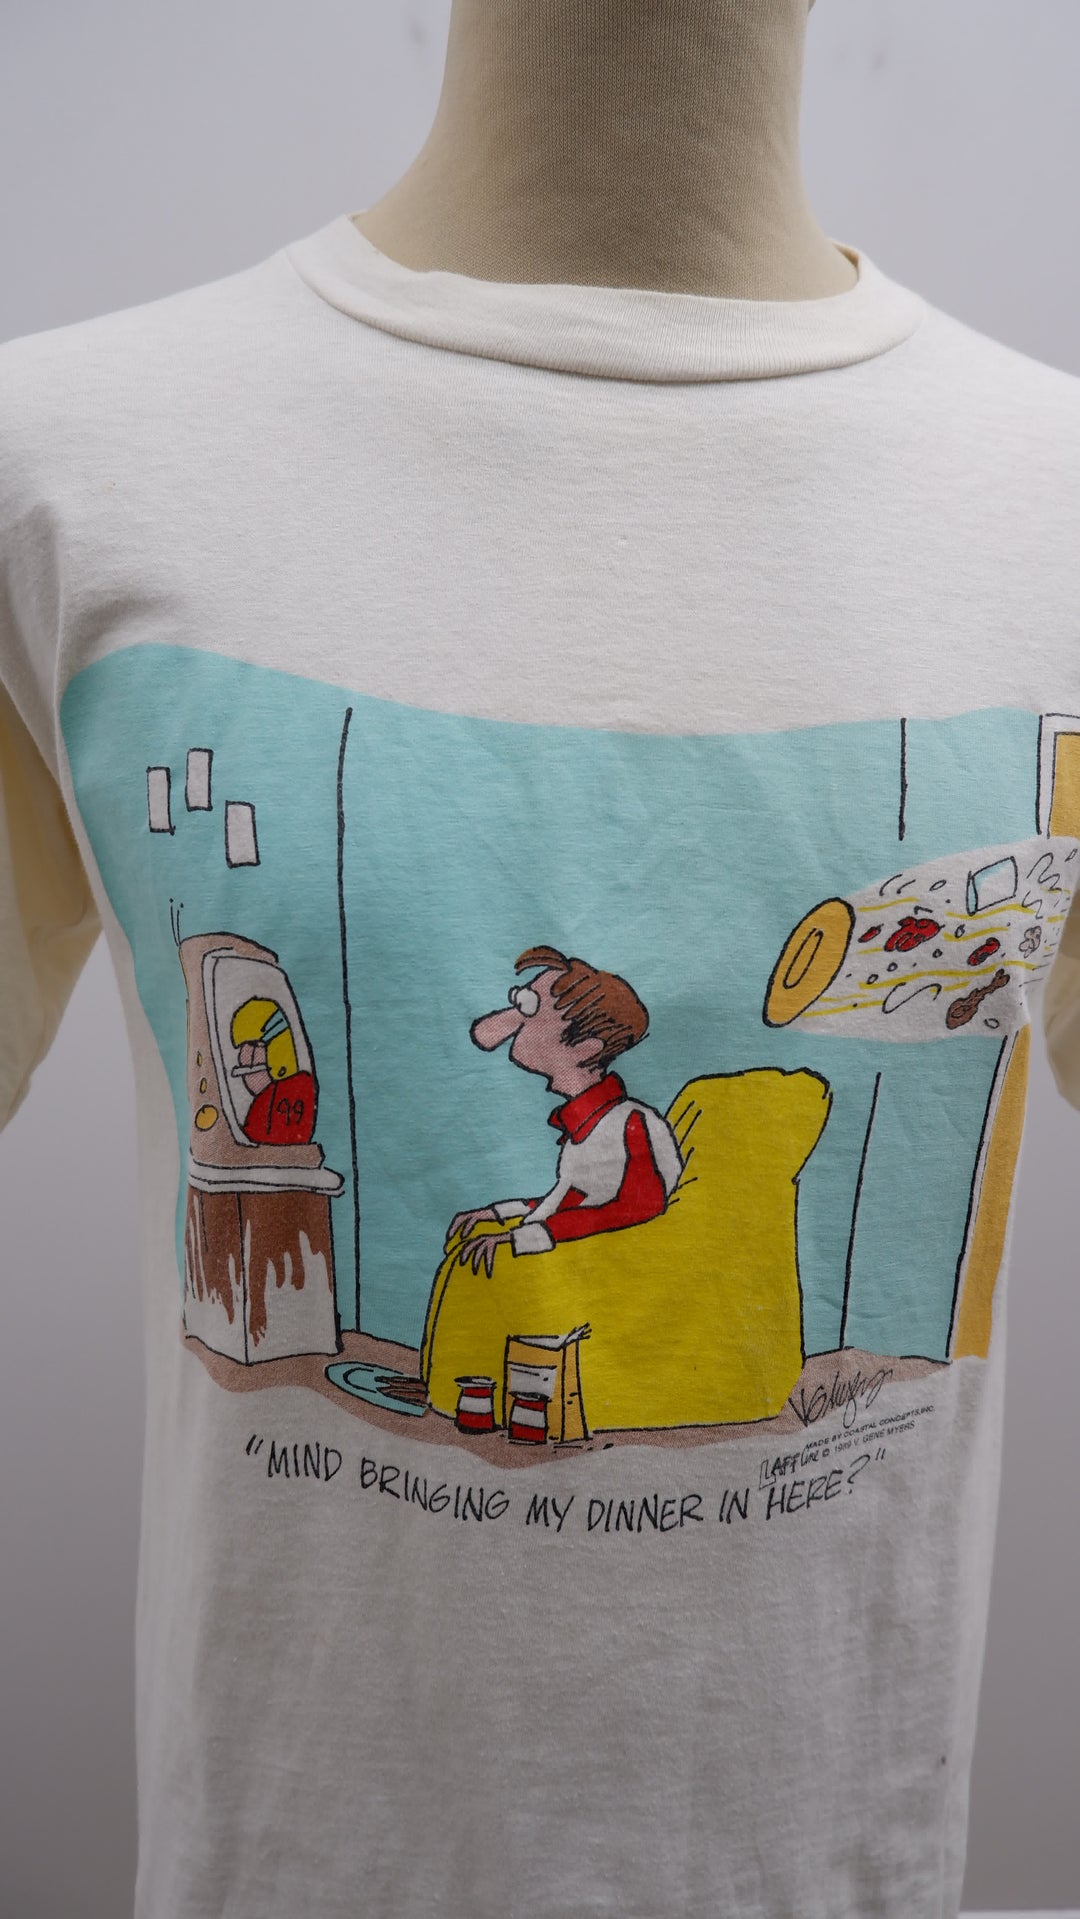 Vintage  1989 Gene Myers Laffline Funny Comic T-Shirt Single Stitch Made In USA